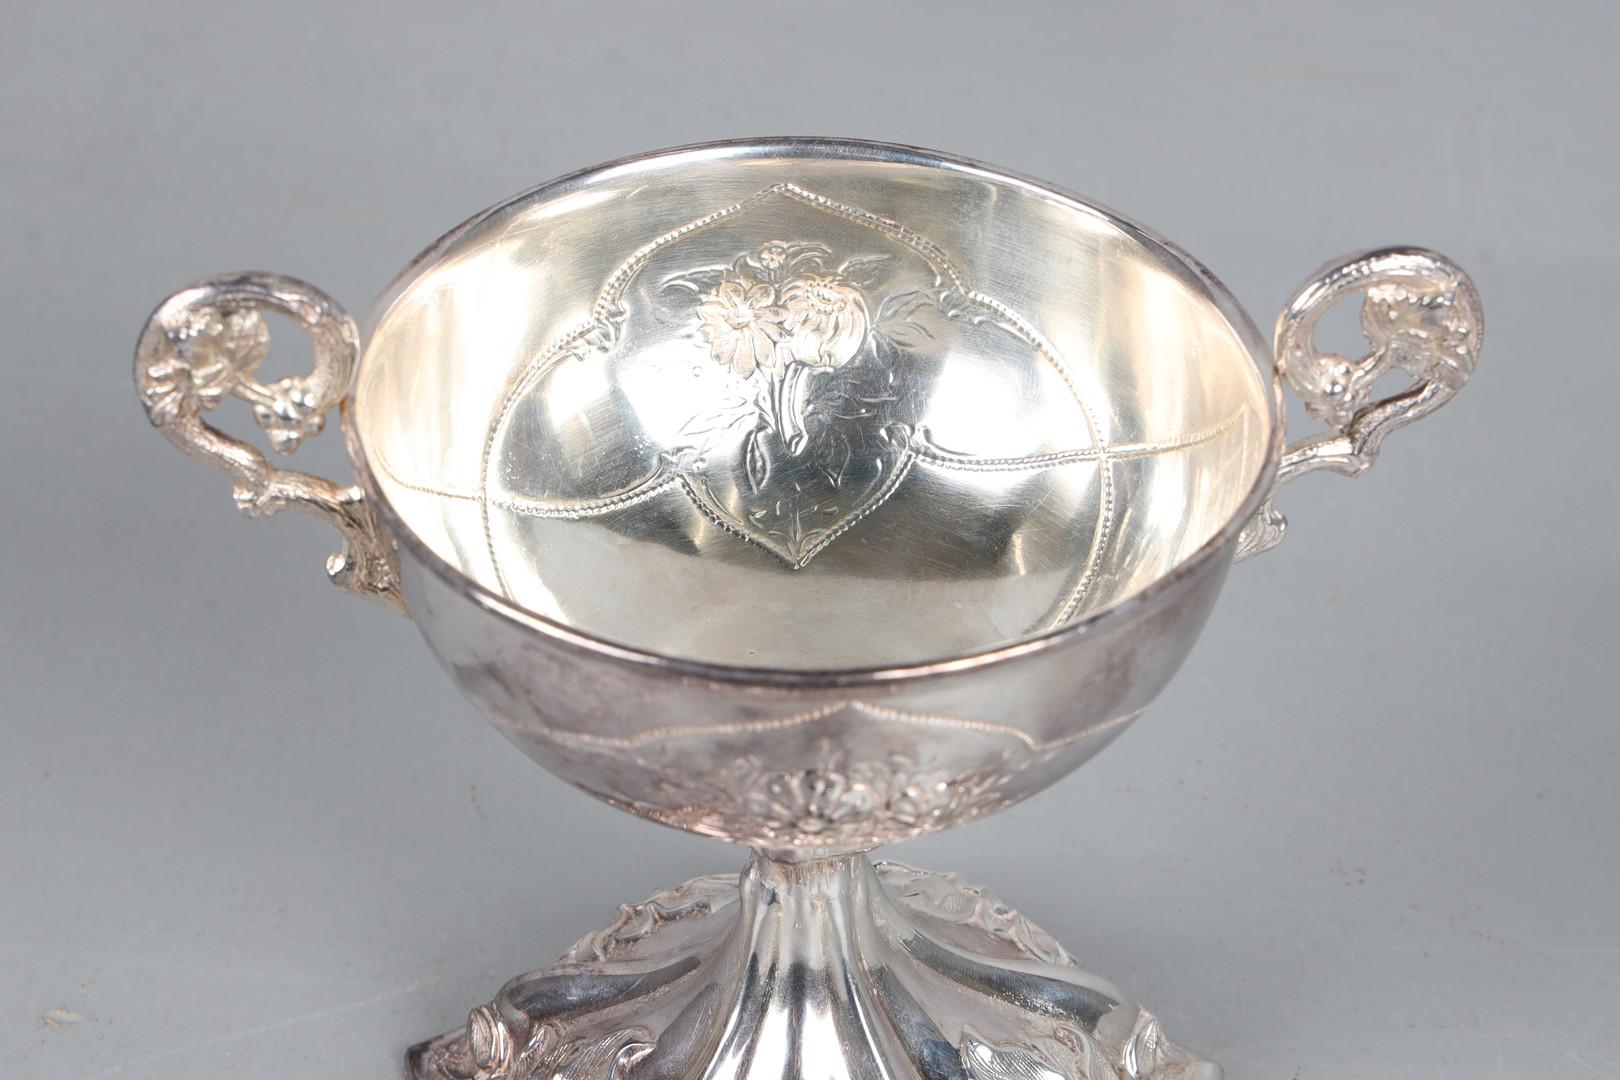 Rococo Revival Antique Sterling Silver Cup, European Rococo Decorative Bowl Cup for Sale